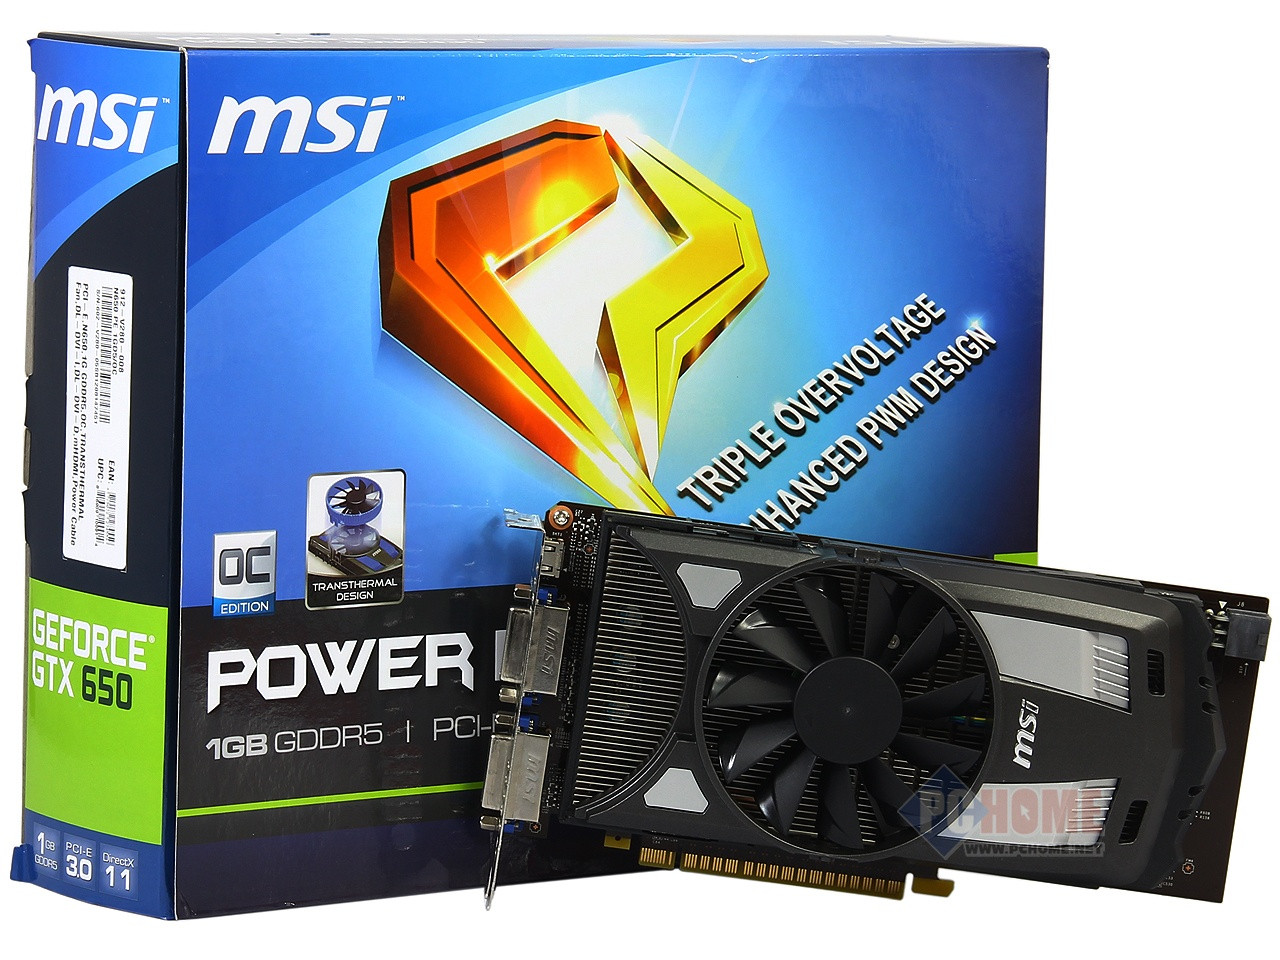 MSI GeForce GTX 650 OC